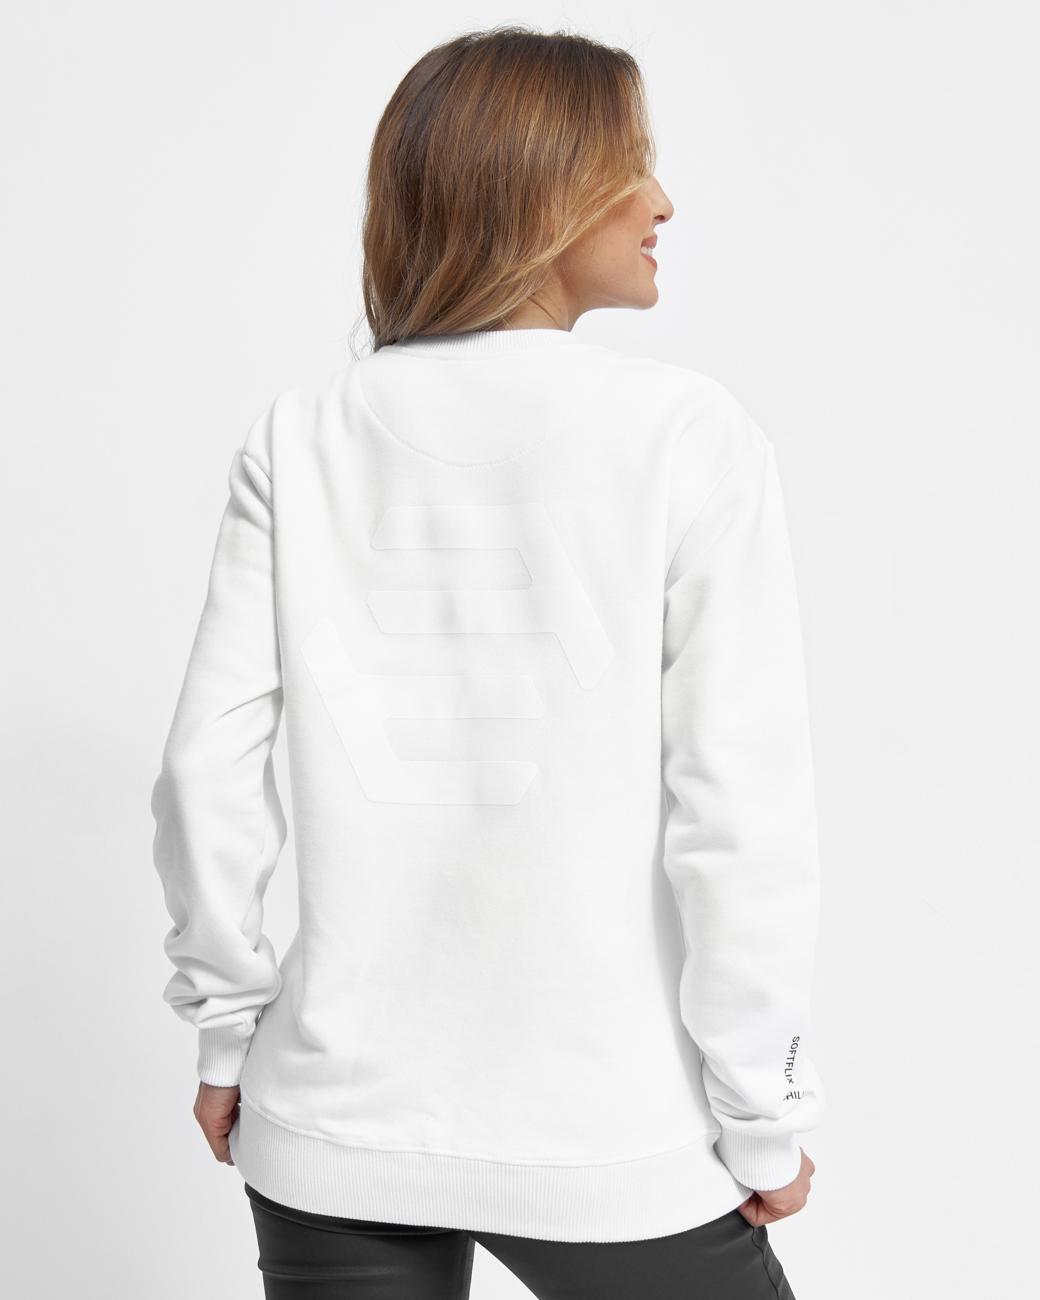 Sweatshirt SOFTFLIX white XL